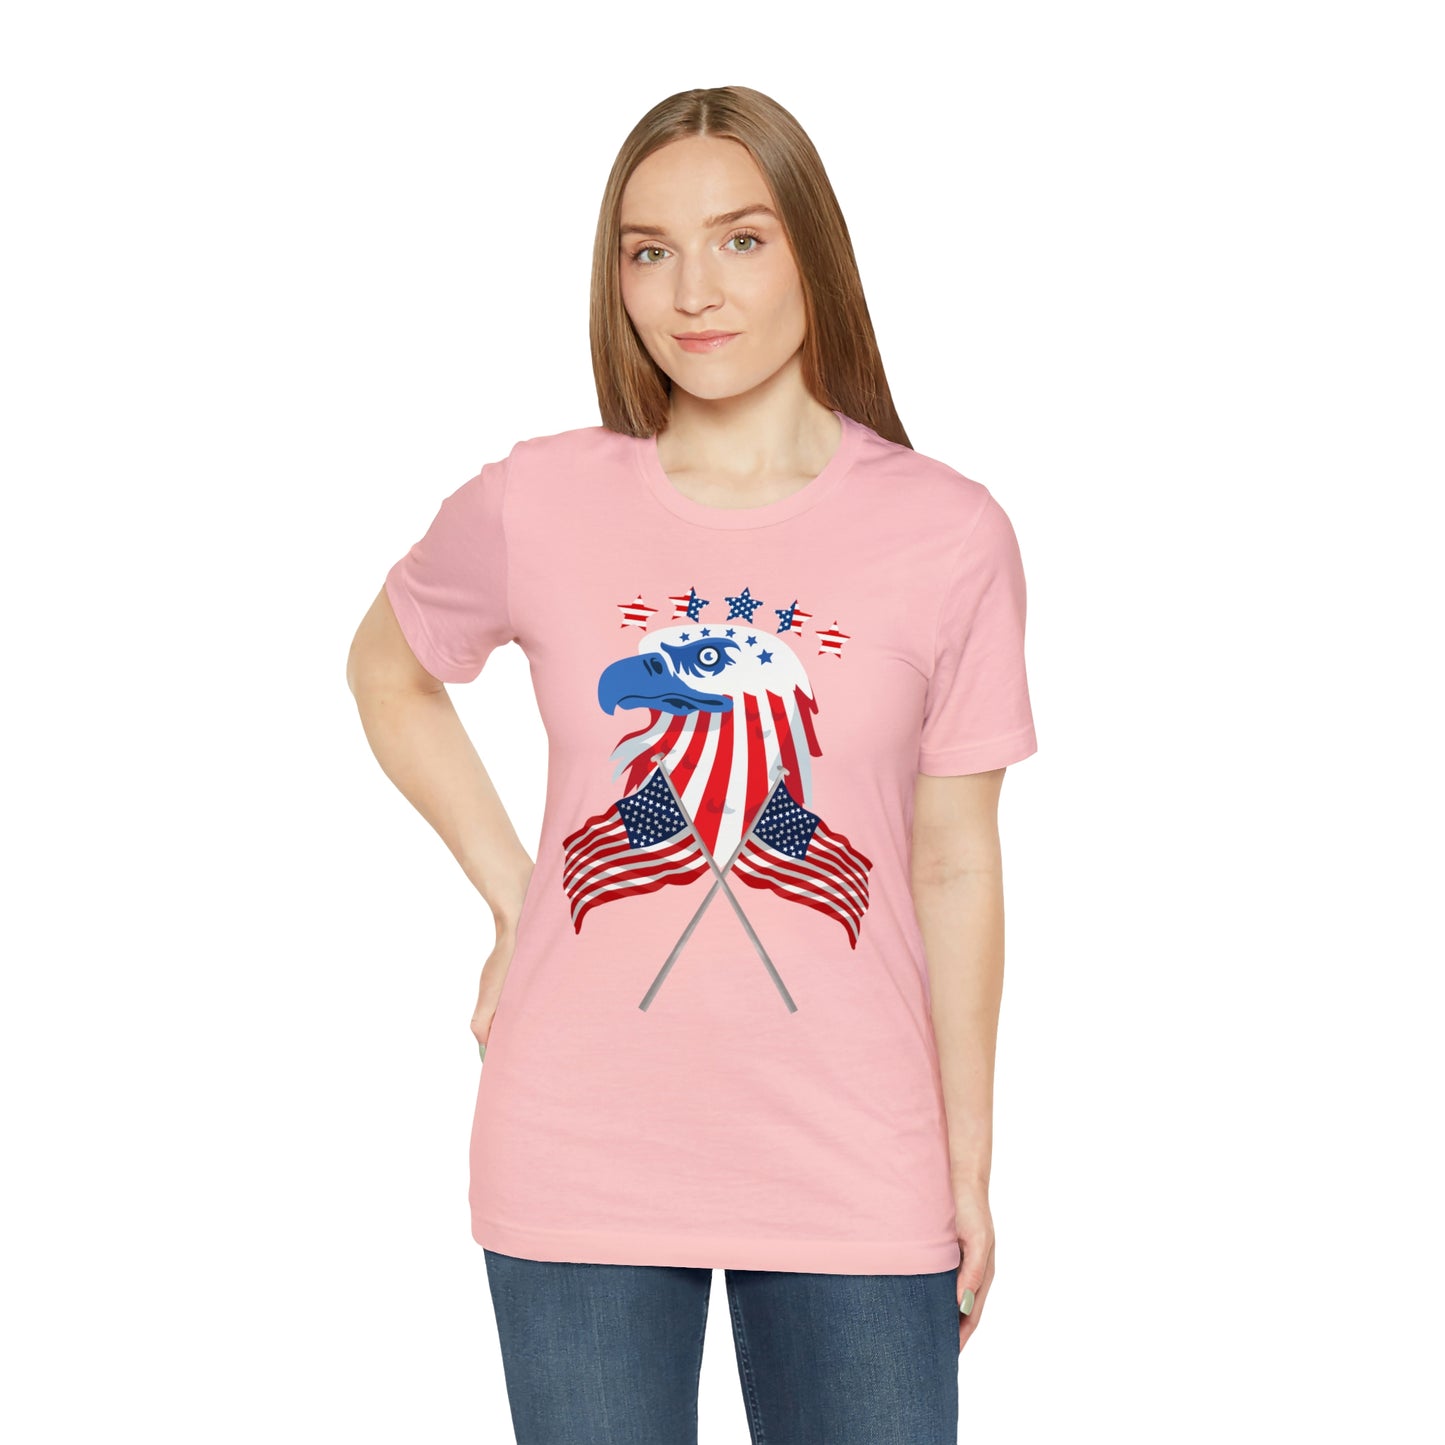 Memorial Day shirt, flag shirt, America, red white and blue Freedom shirt,